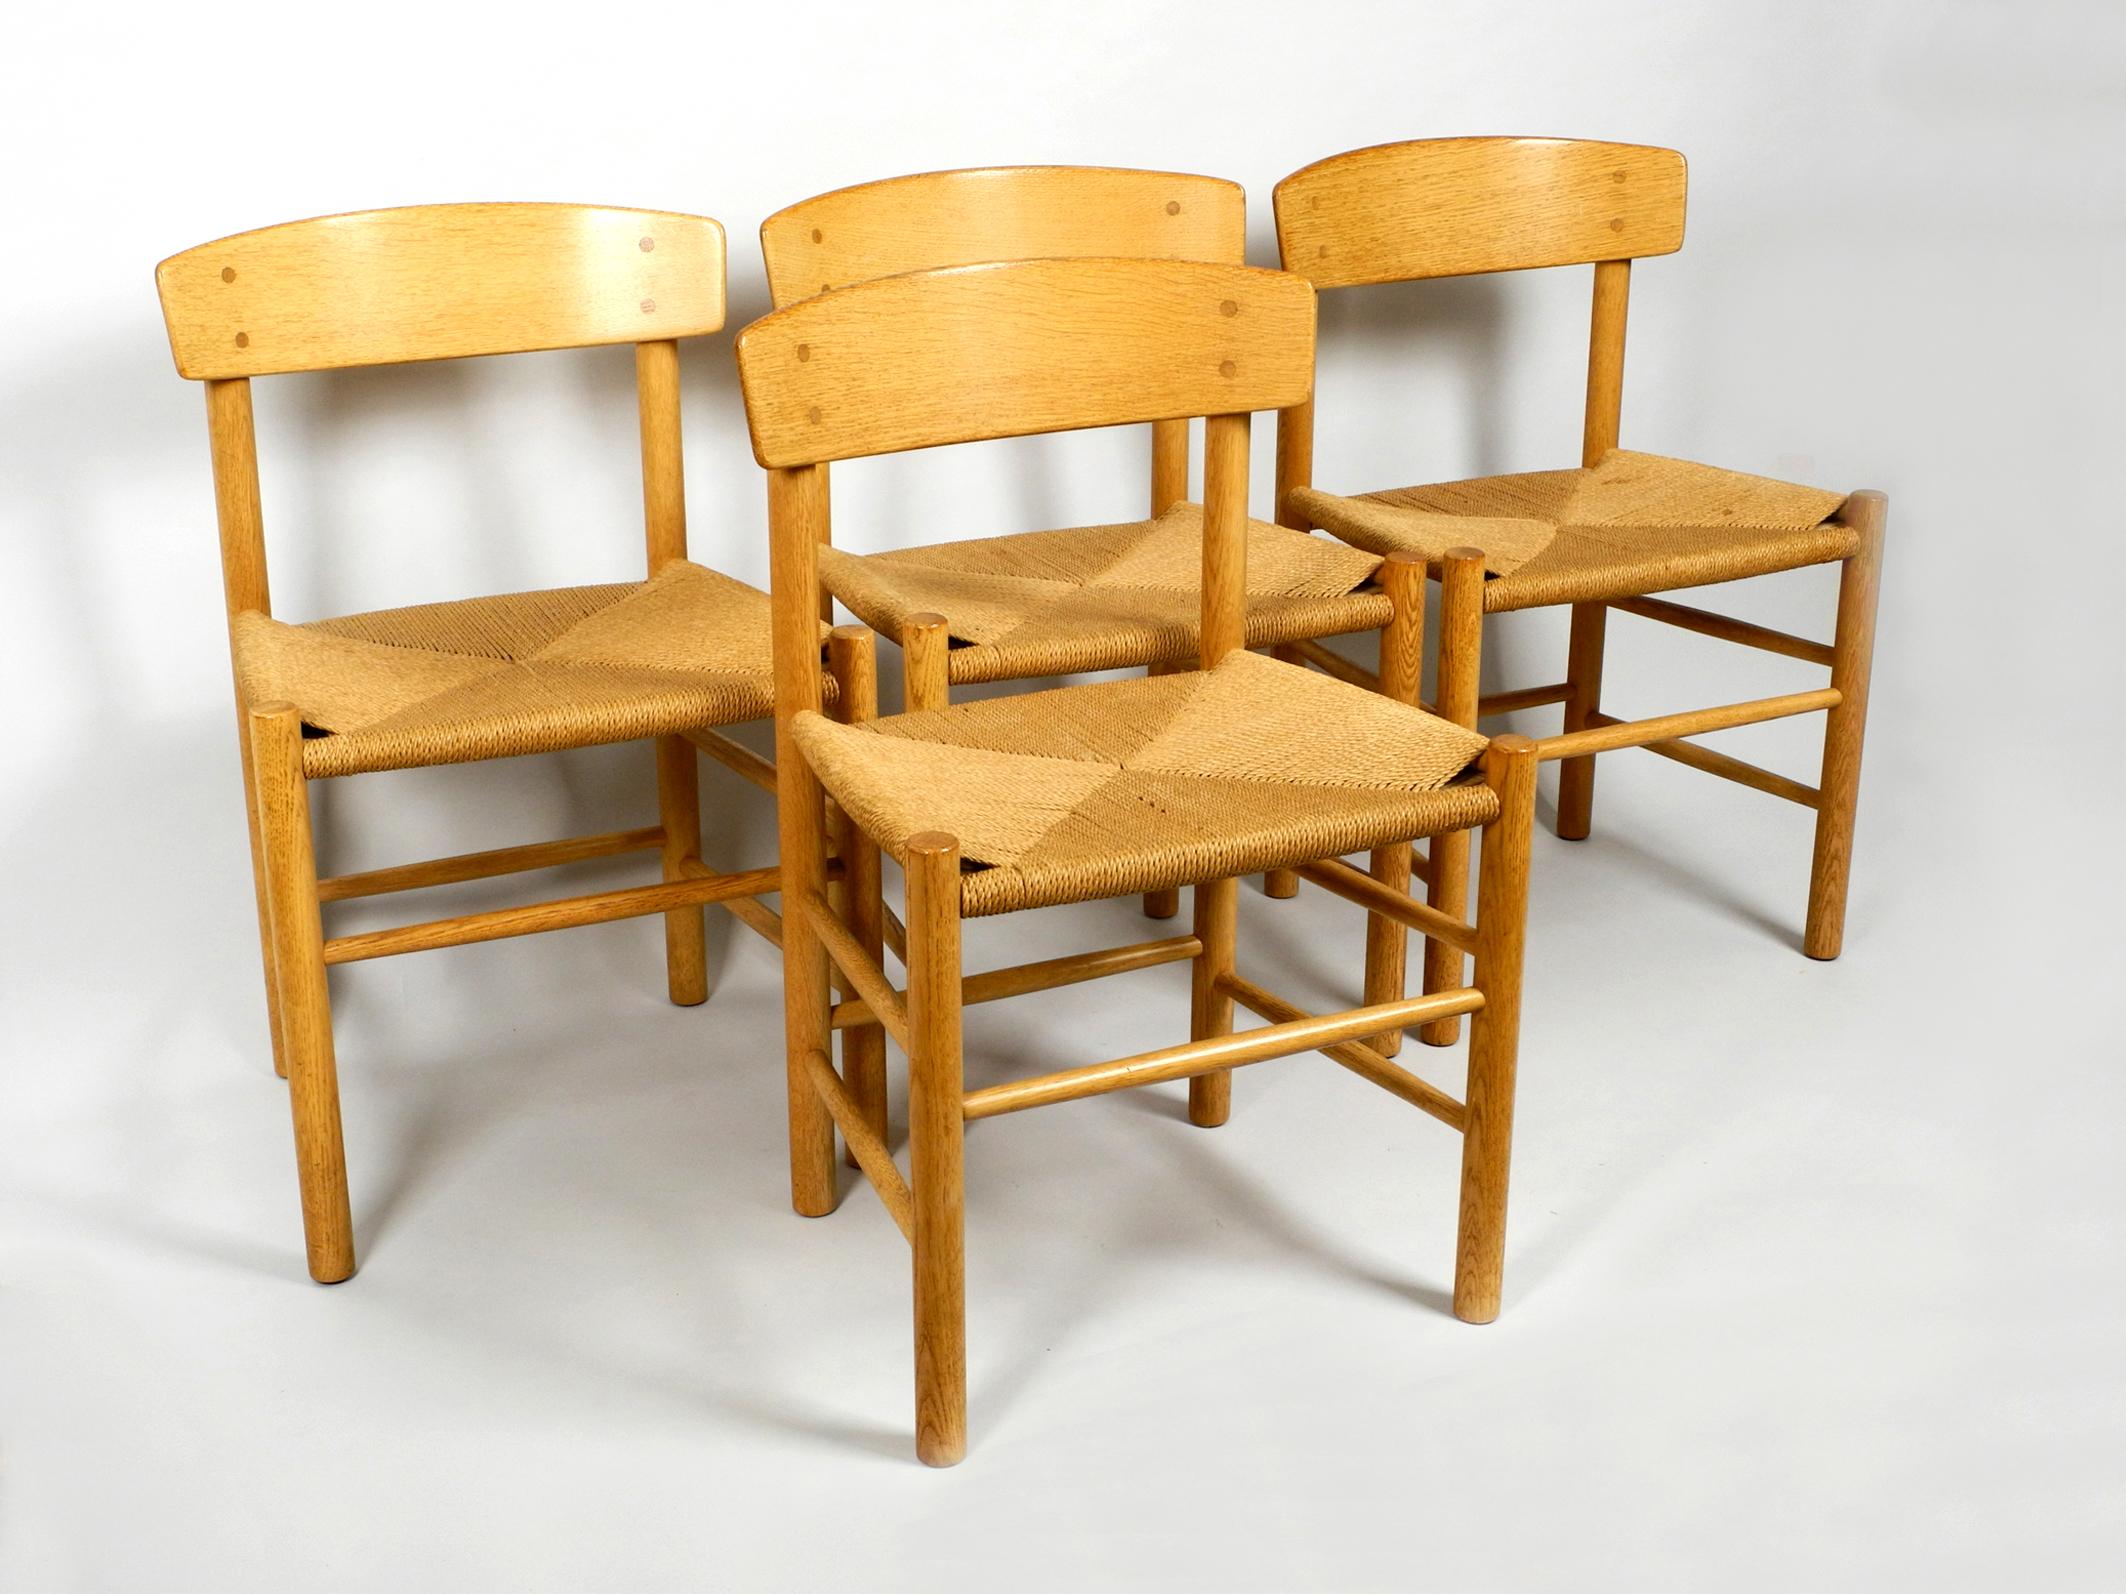 Four original J39 Mogensen chairs made of oak and wicker. Made in Denmark.
The J39 Mogensen chair is a design by the Danish designer Børge Mogensen from 1947.
Børge Mogensen (1914-1972) worked as a designer for the well-known manufacturer